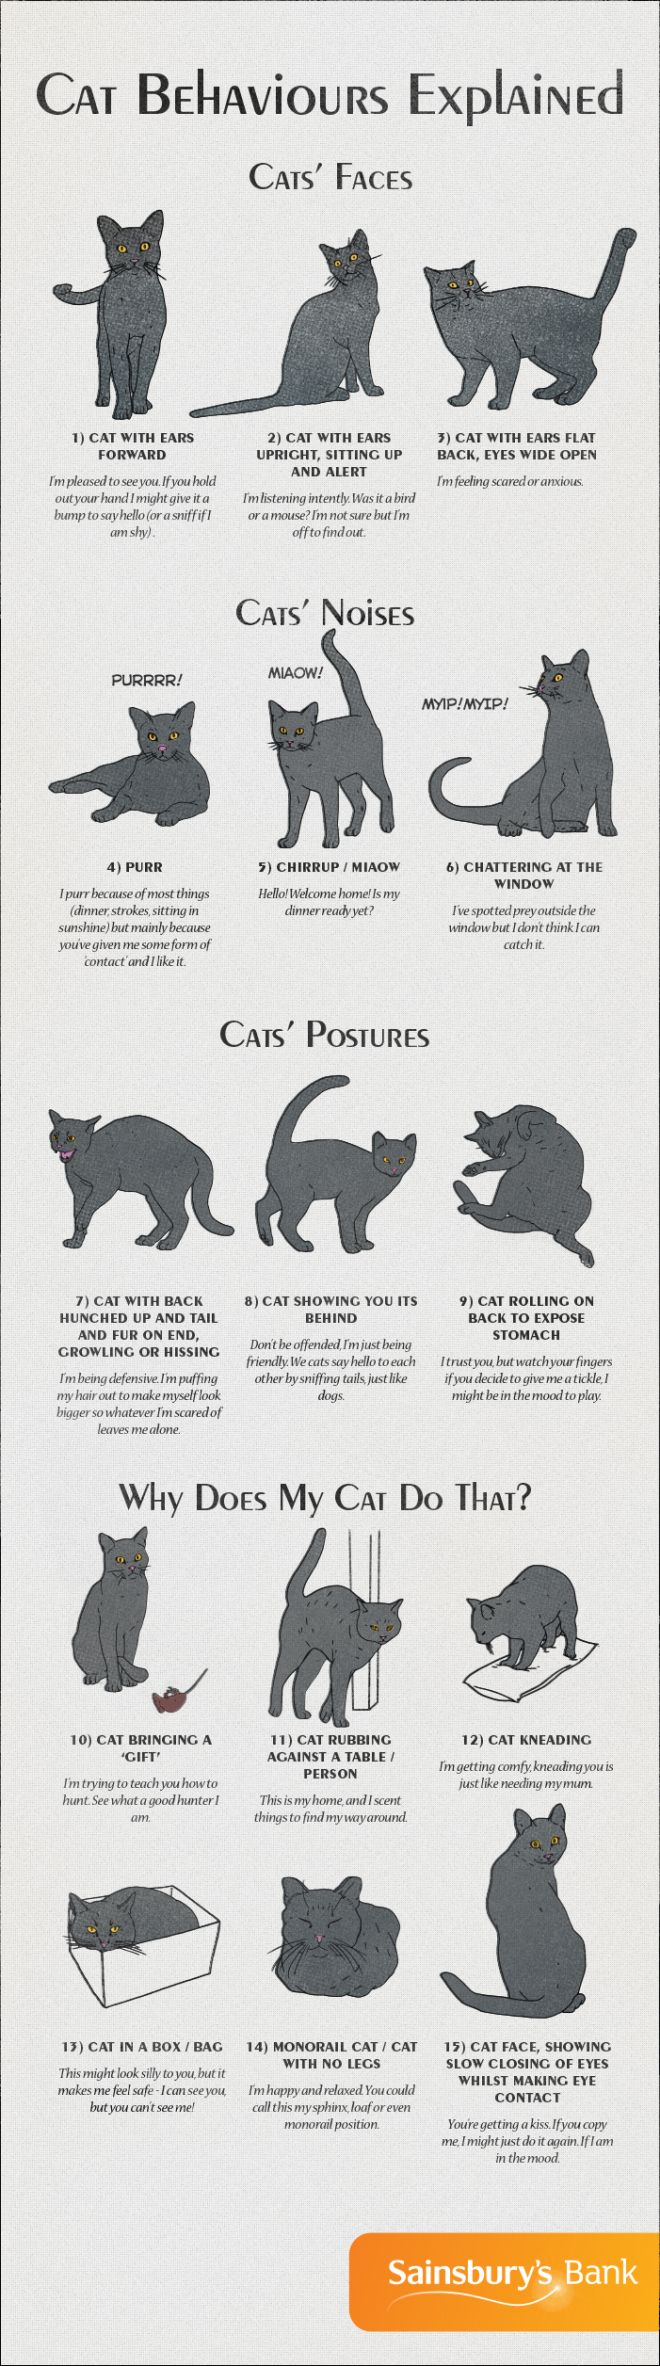 Educational infographic Cat body language, noises, postures, facial